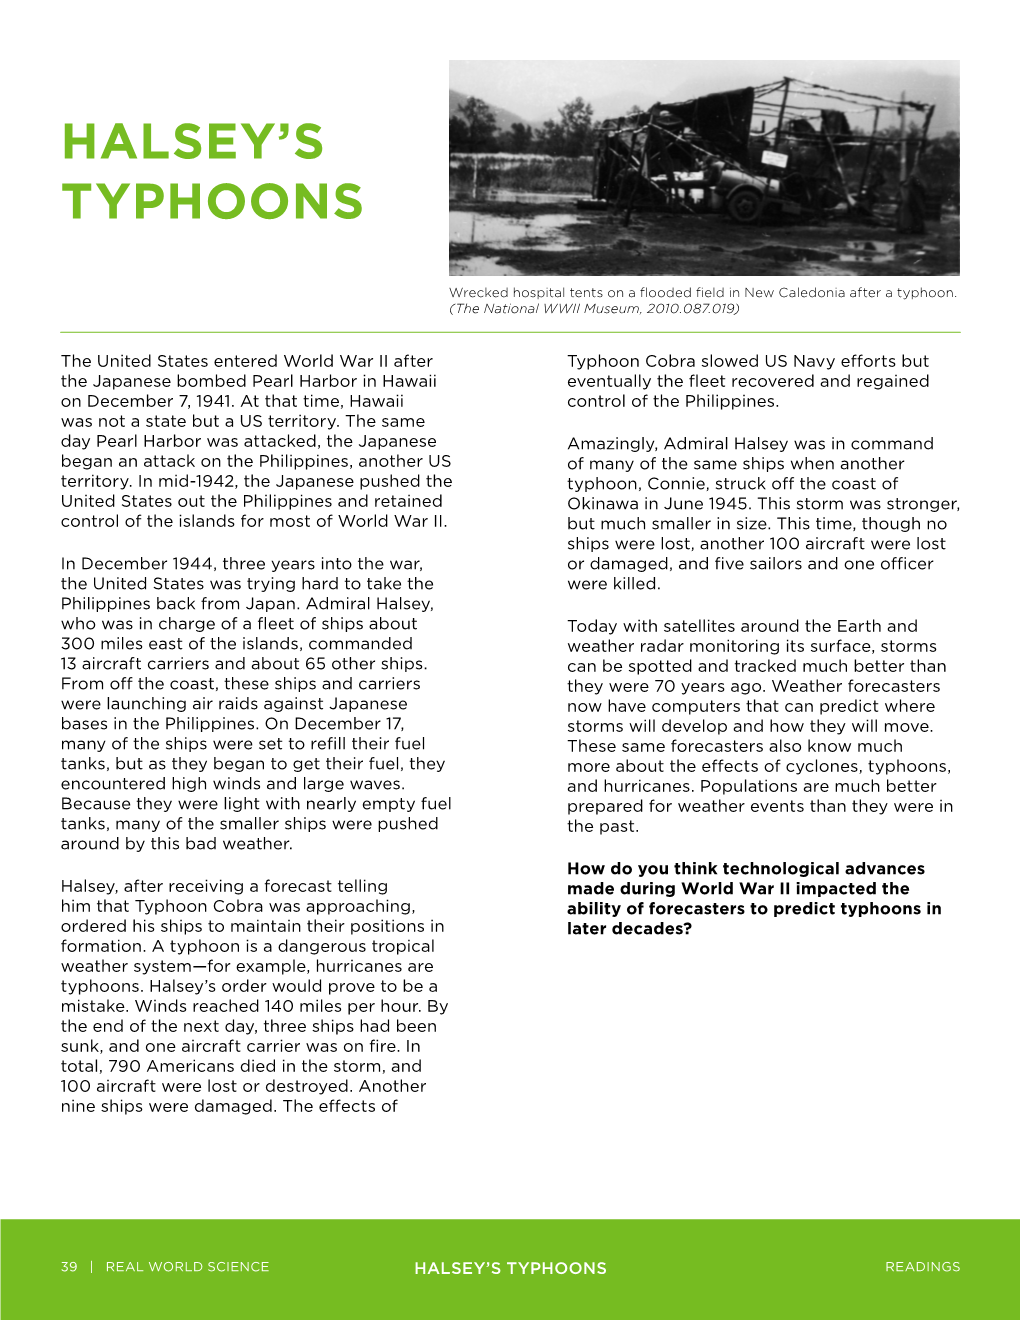 Halsey's Typhoons